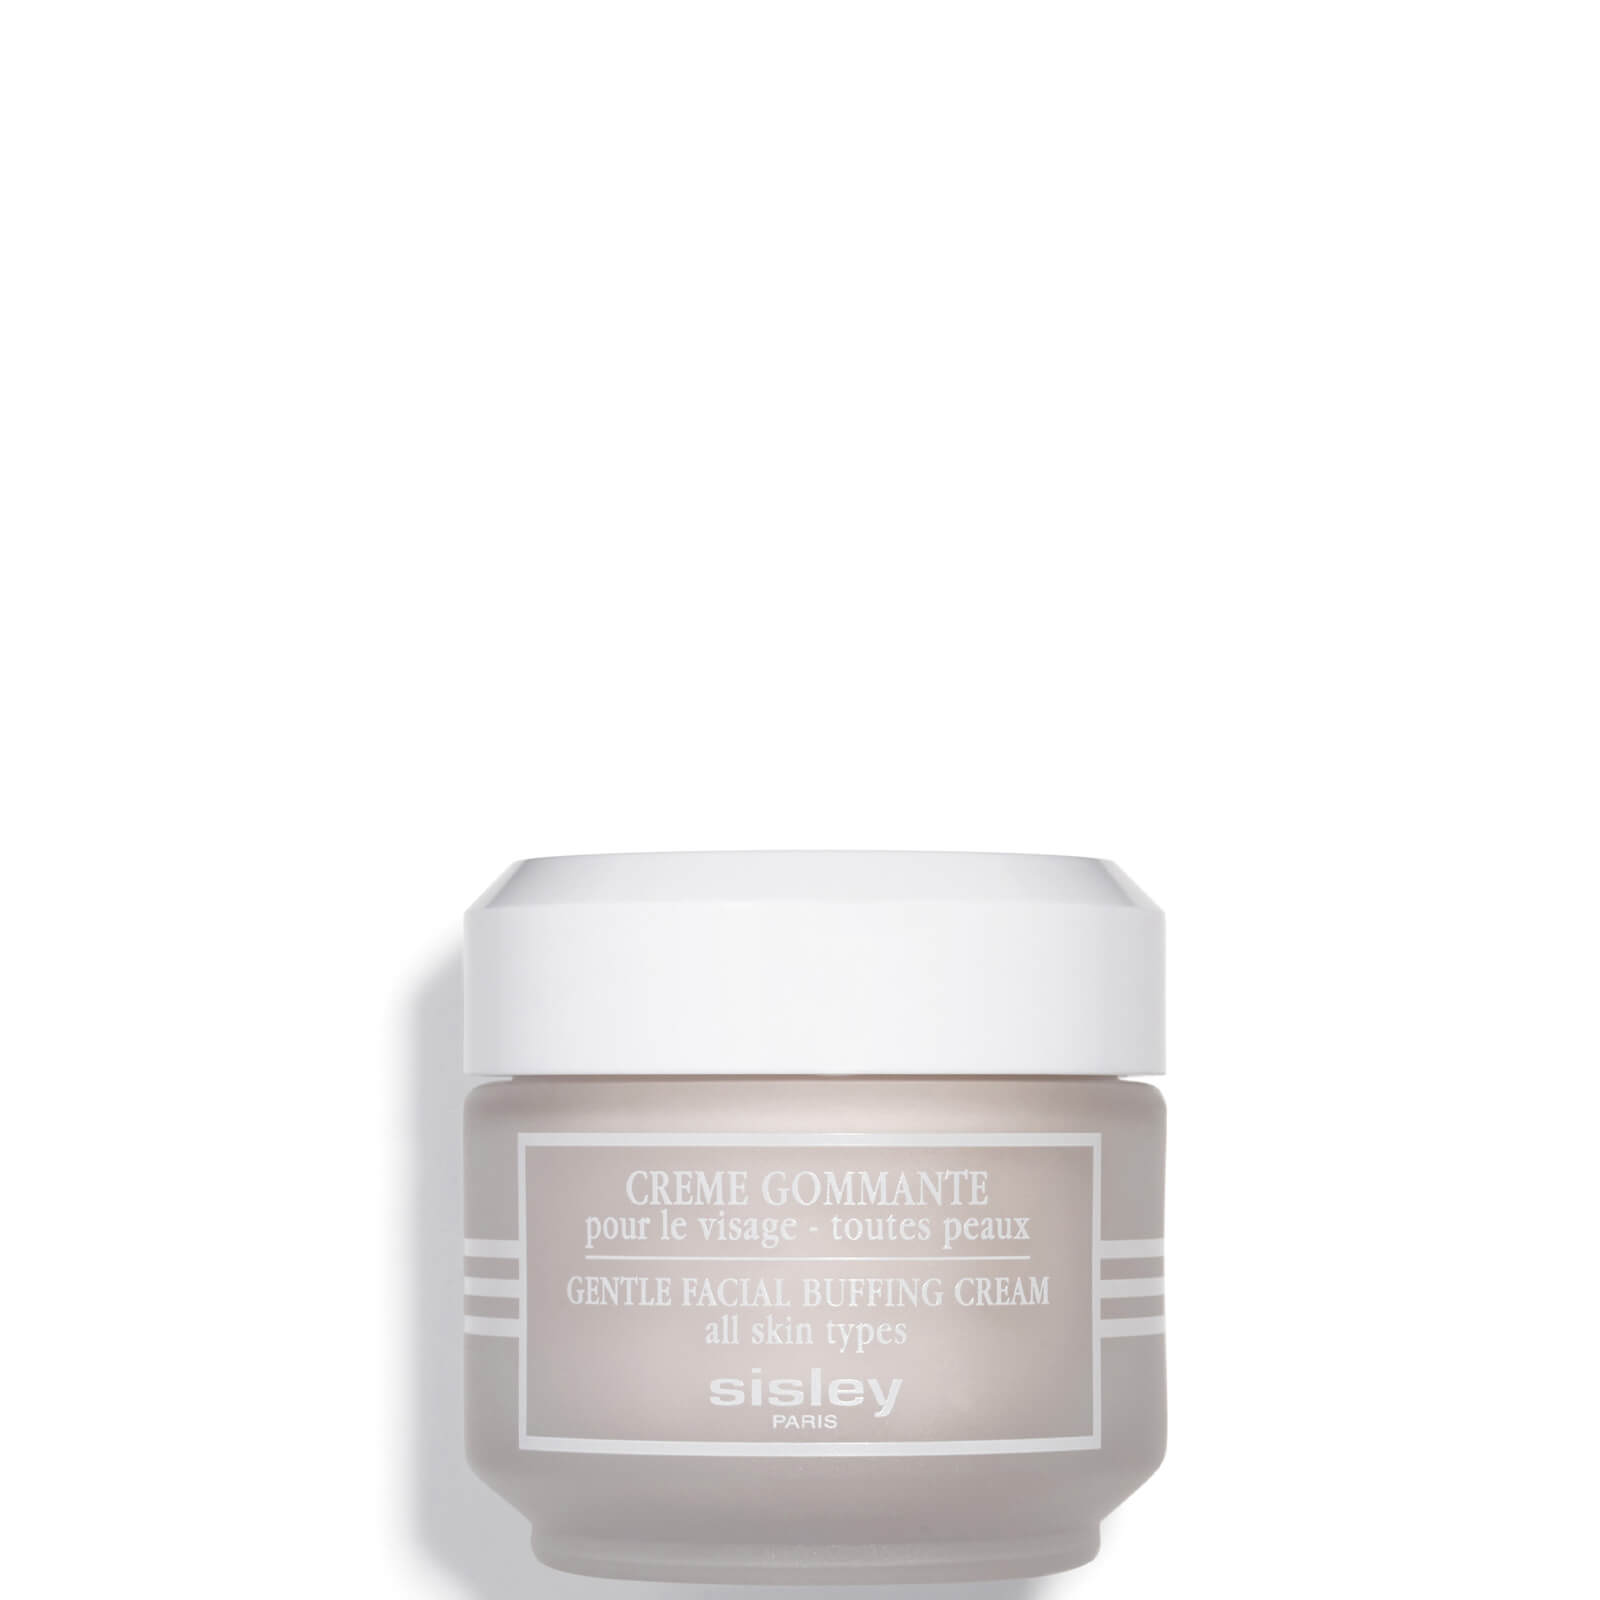 Photos - Facial / Body Cleansing Product Sisley PARIS Gentle Facial Buffing Cream Jar 50ml 